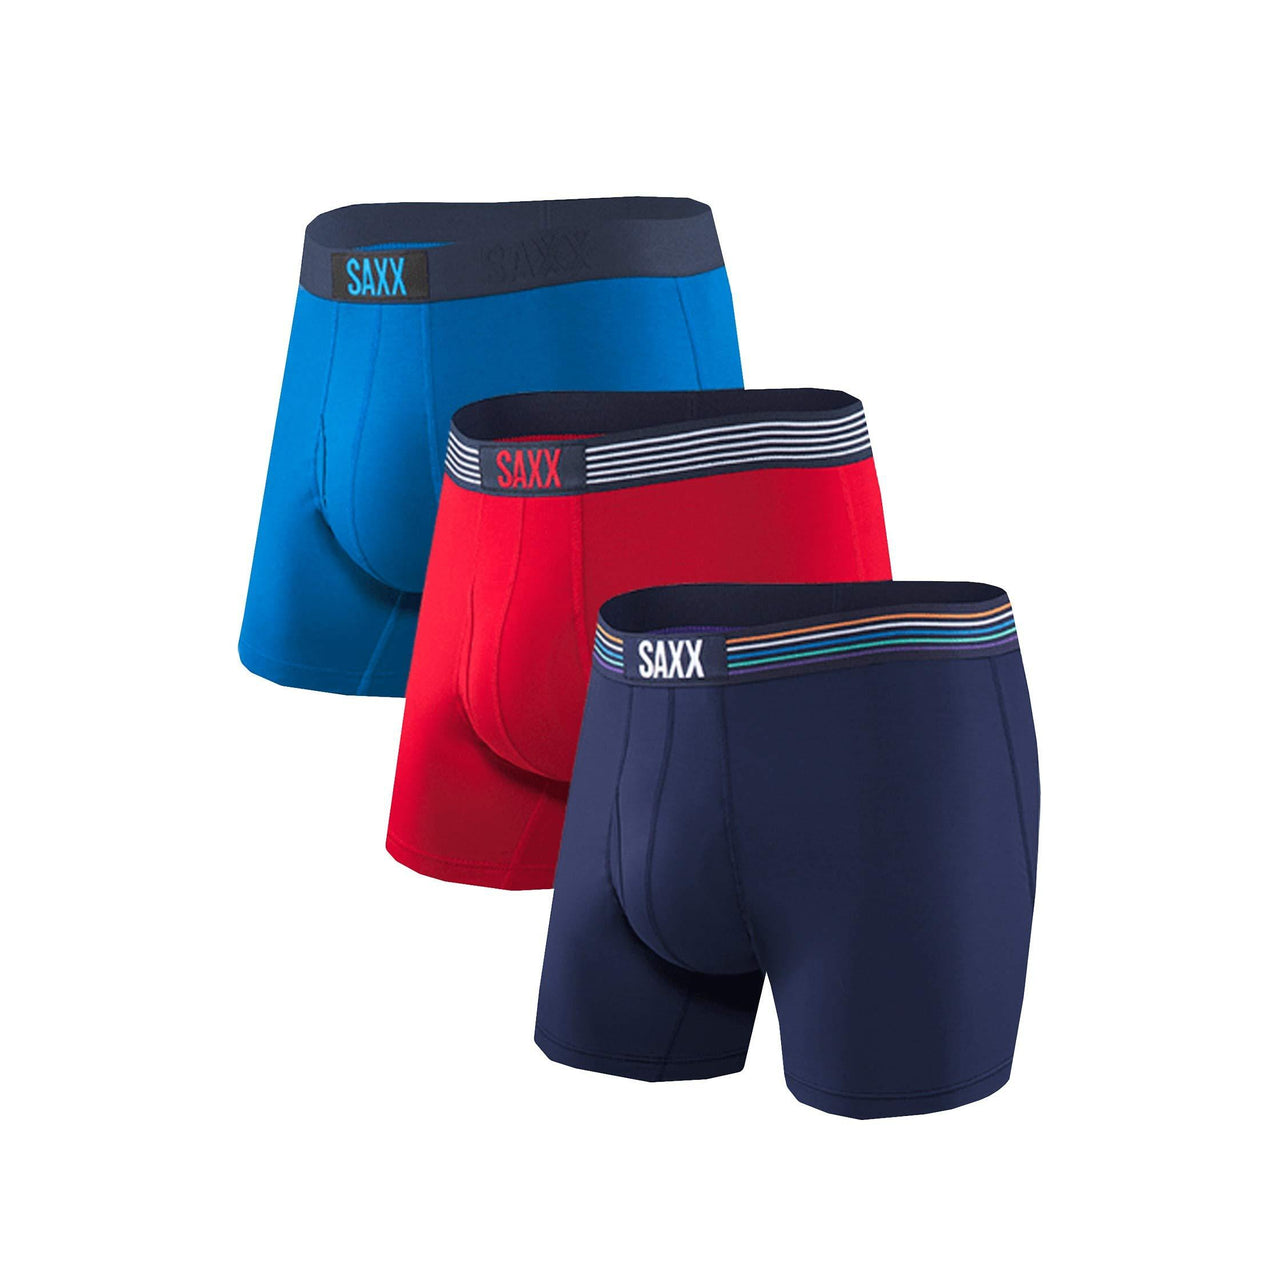 Saxx Men's Ultra Super Soft Boxer Briefs - 3-Pack